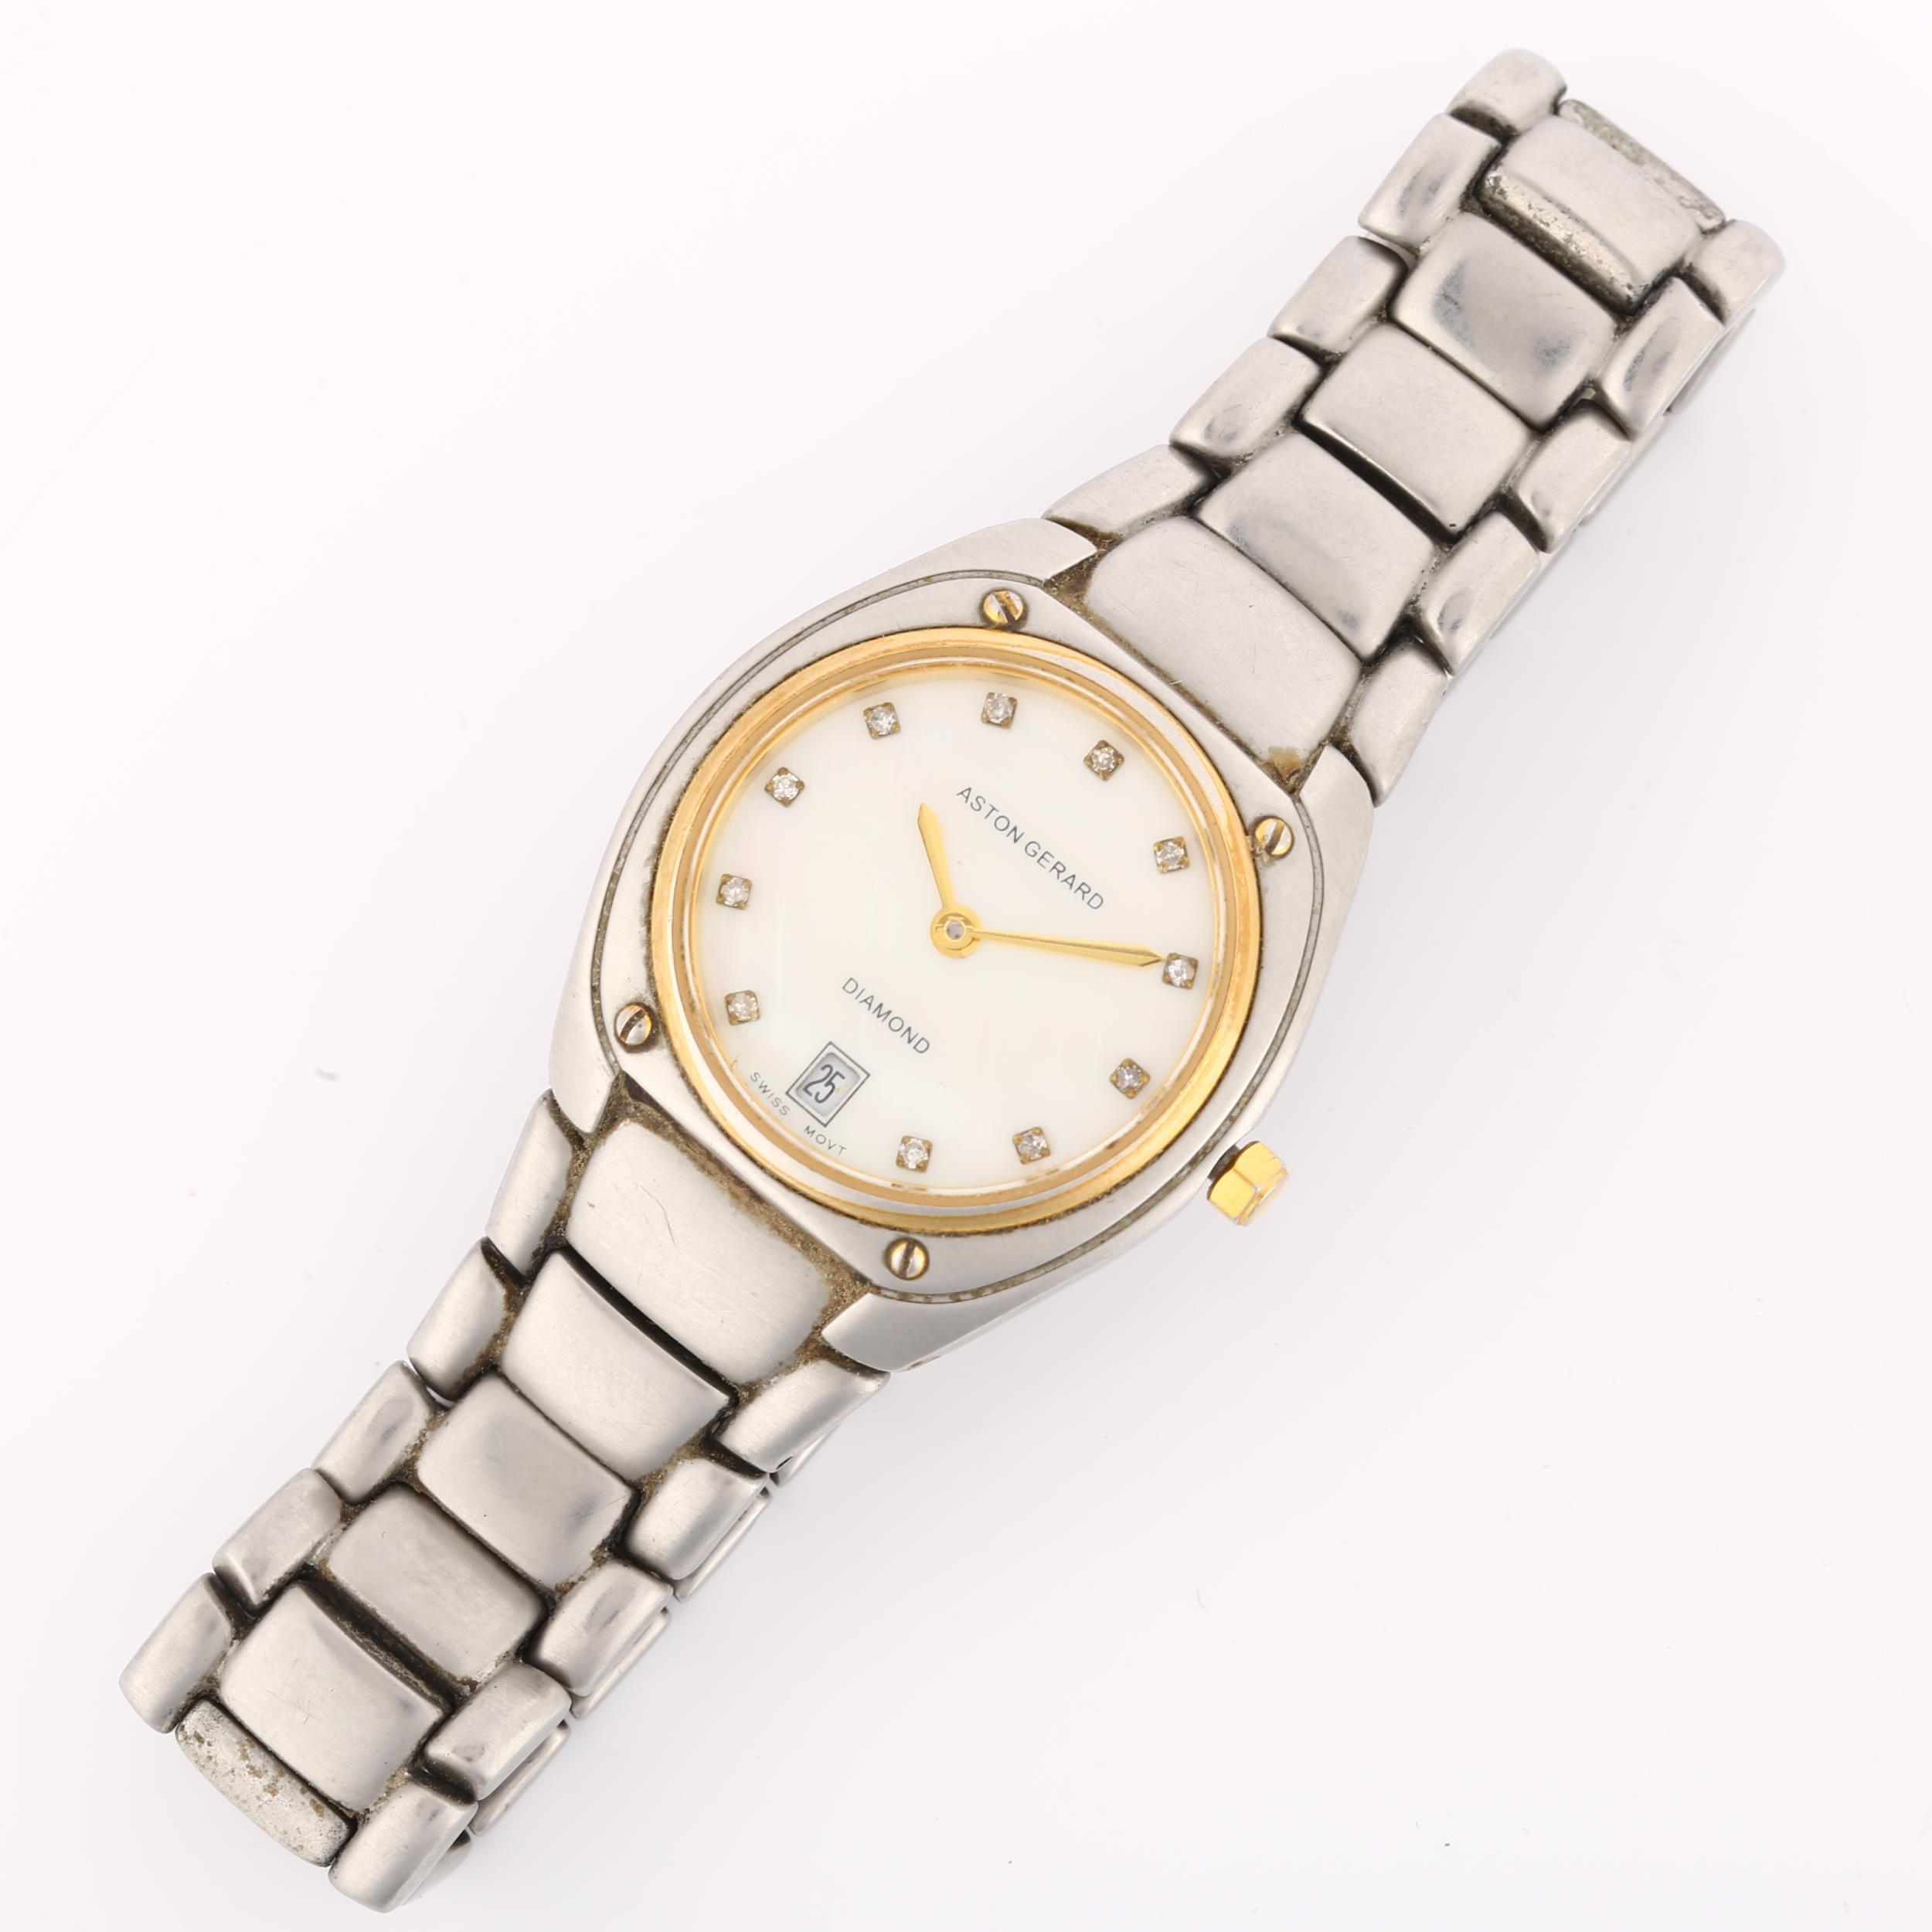 ASTON GERARD - a lady's stainless steel Diamond quartz bracelet watch, ref. 261267KL, mother-of- - Image 2 of 5